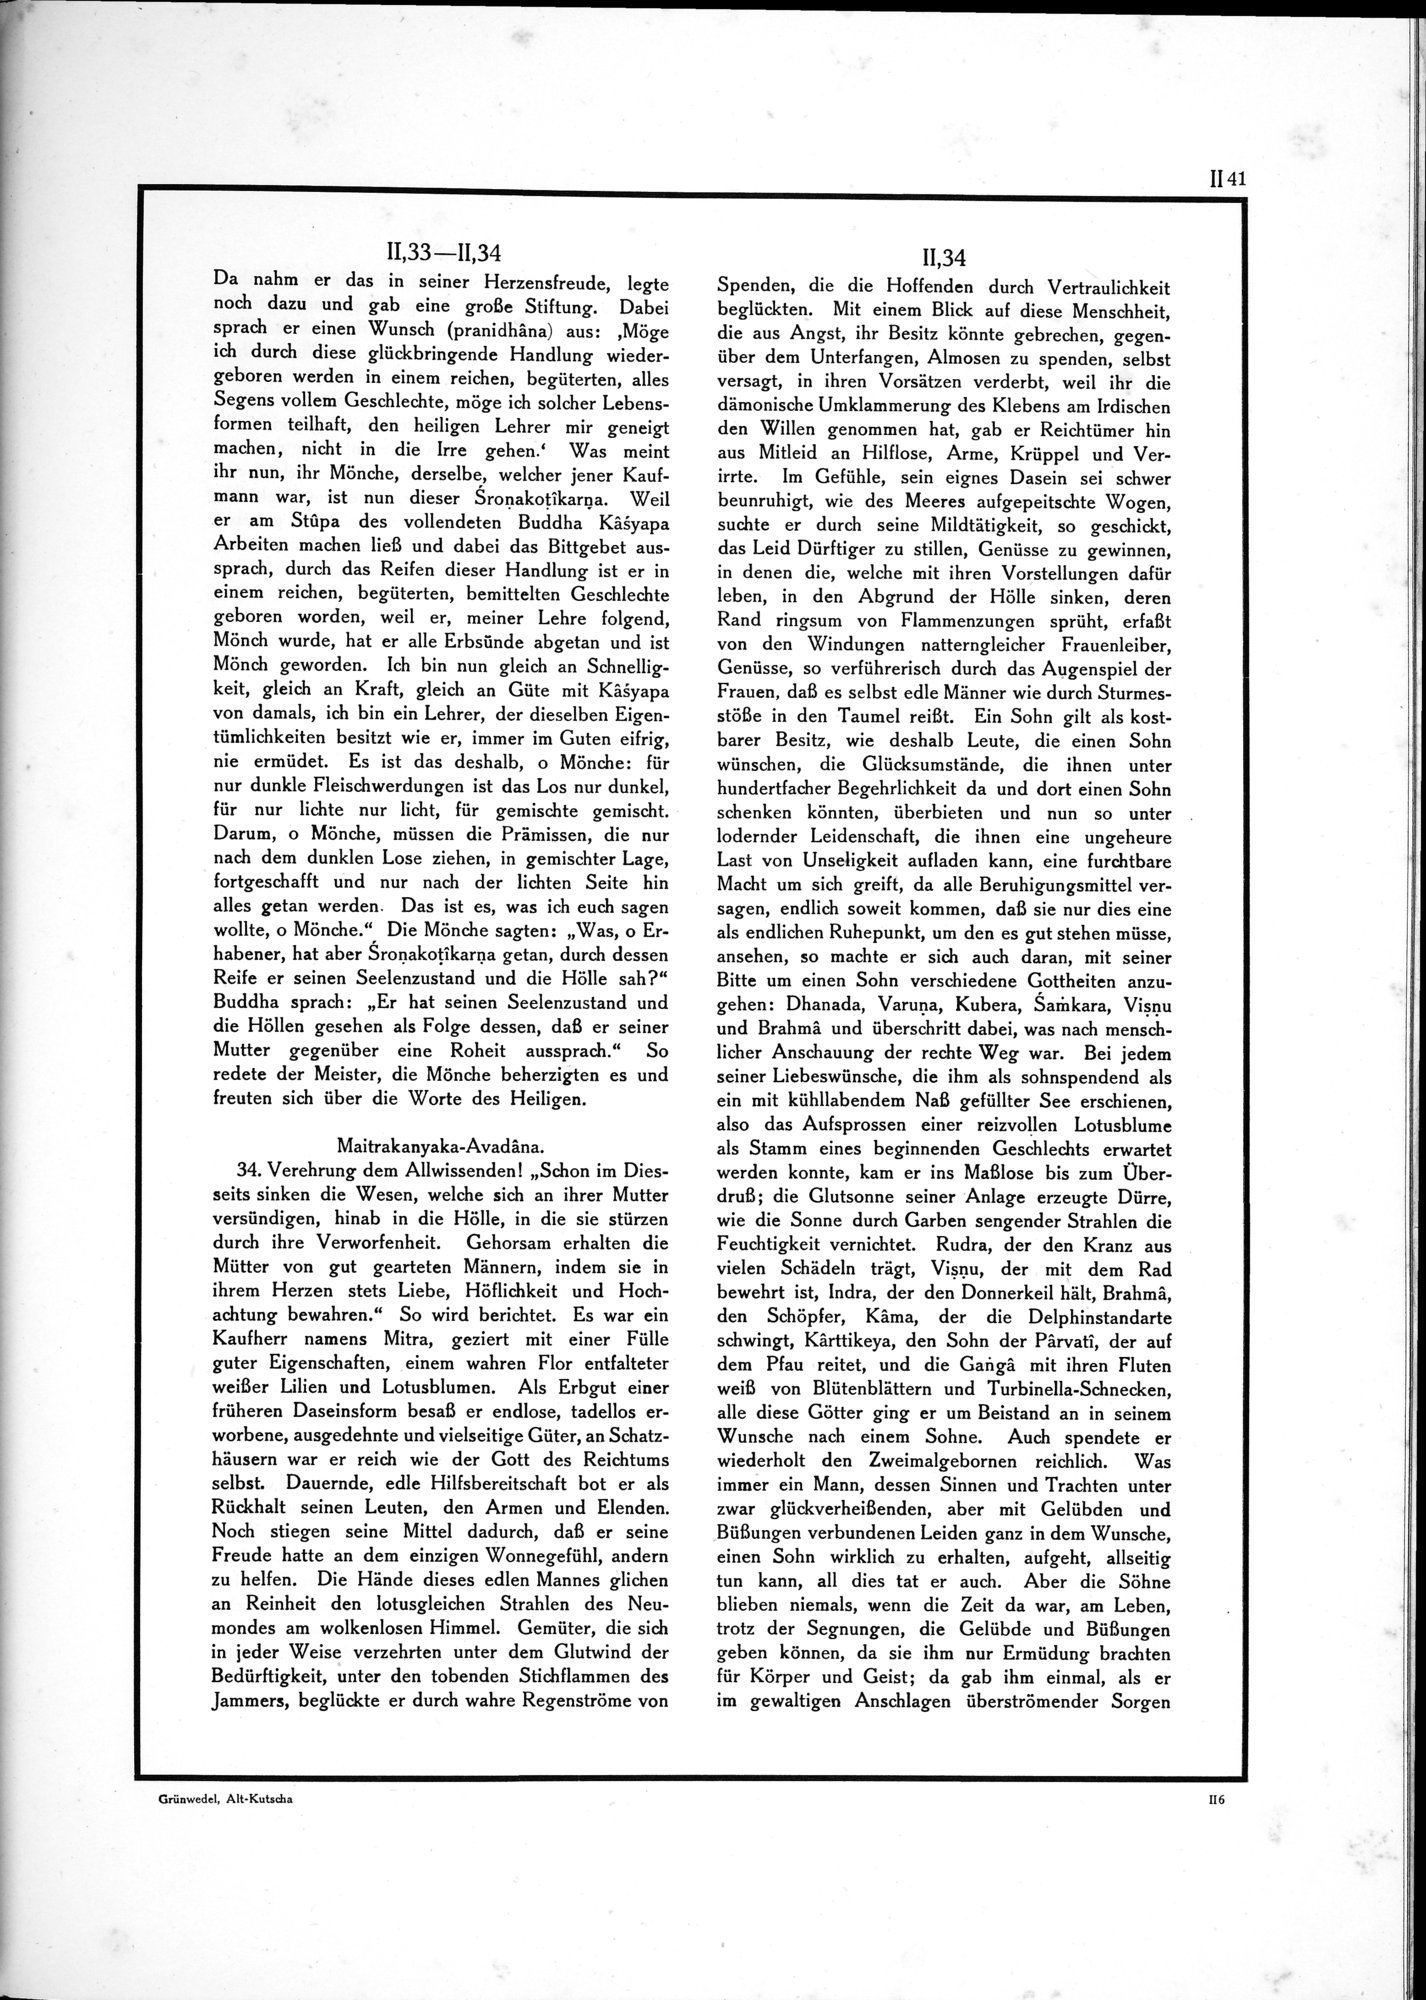 Alt-Kutscha : vol.1 / Page 147 (Grayscale High Resolution Image)